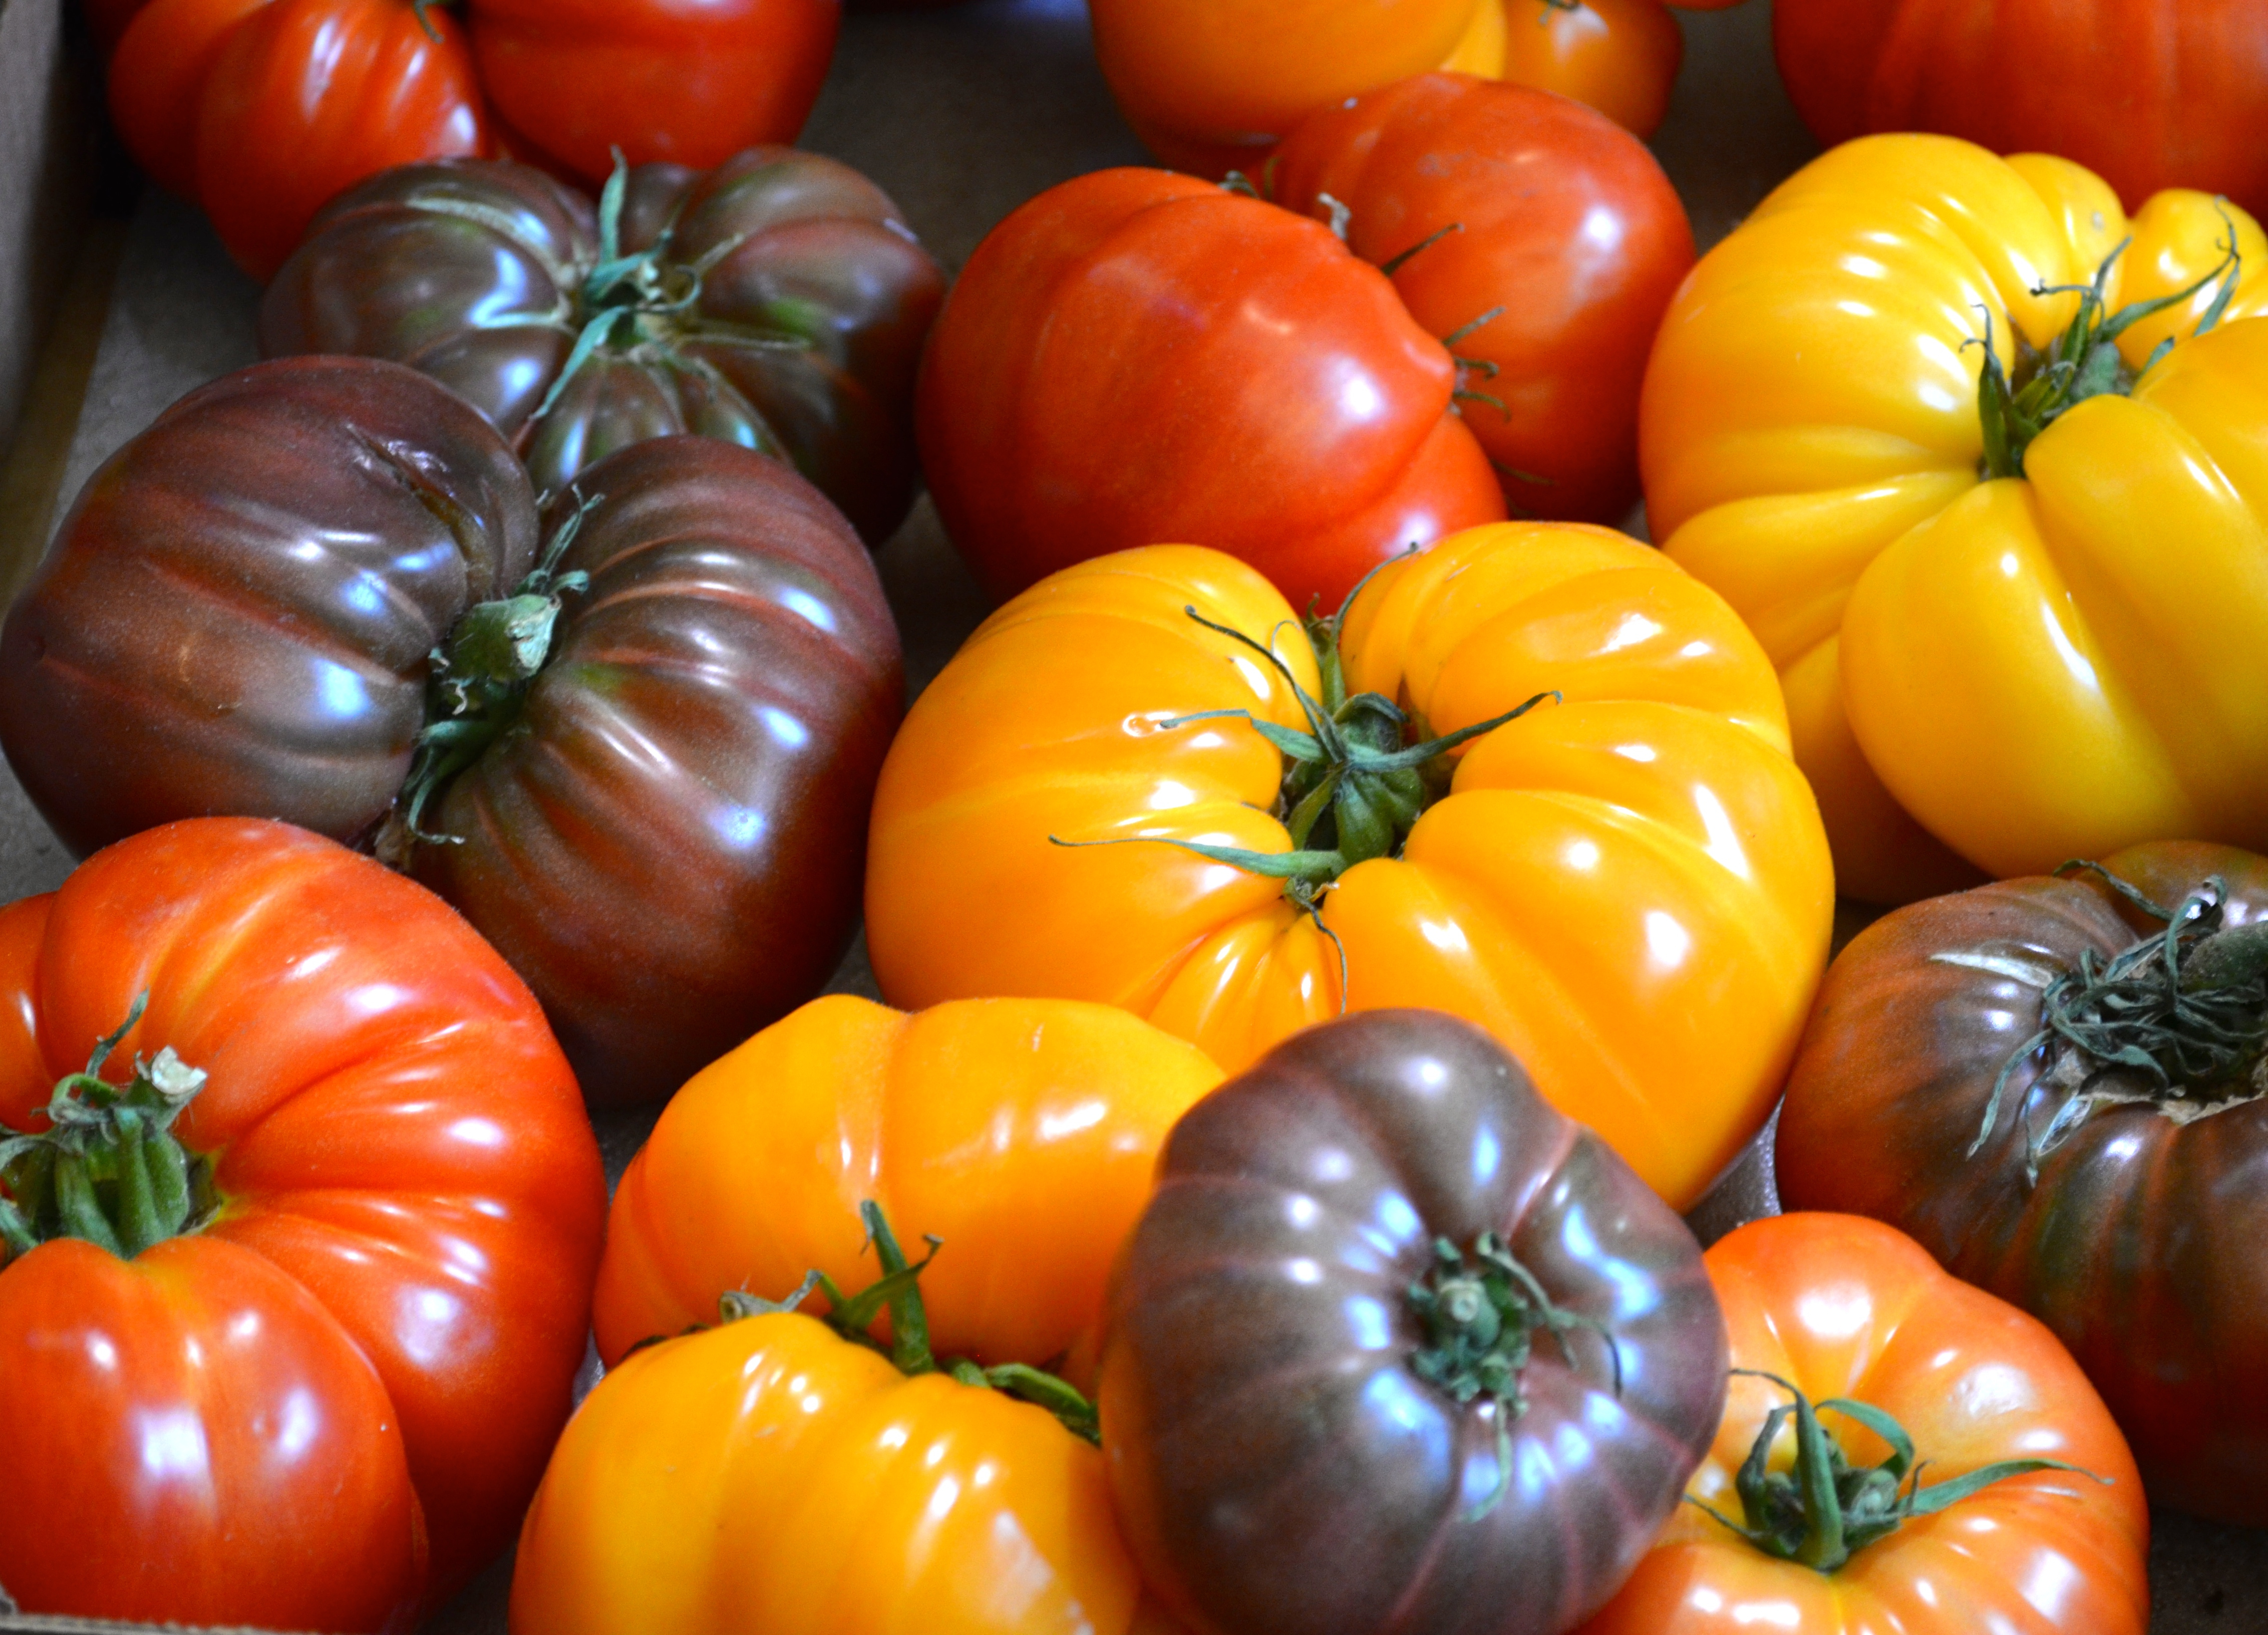 III. History and Origins of Heirloom Tomatoes